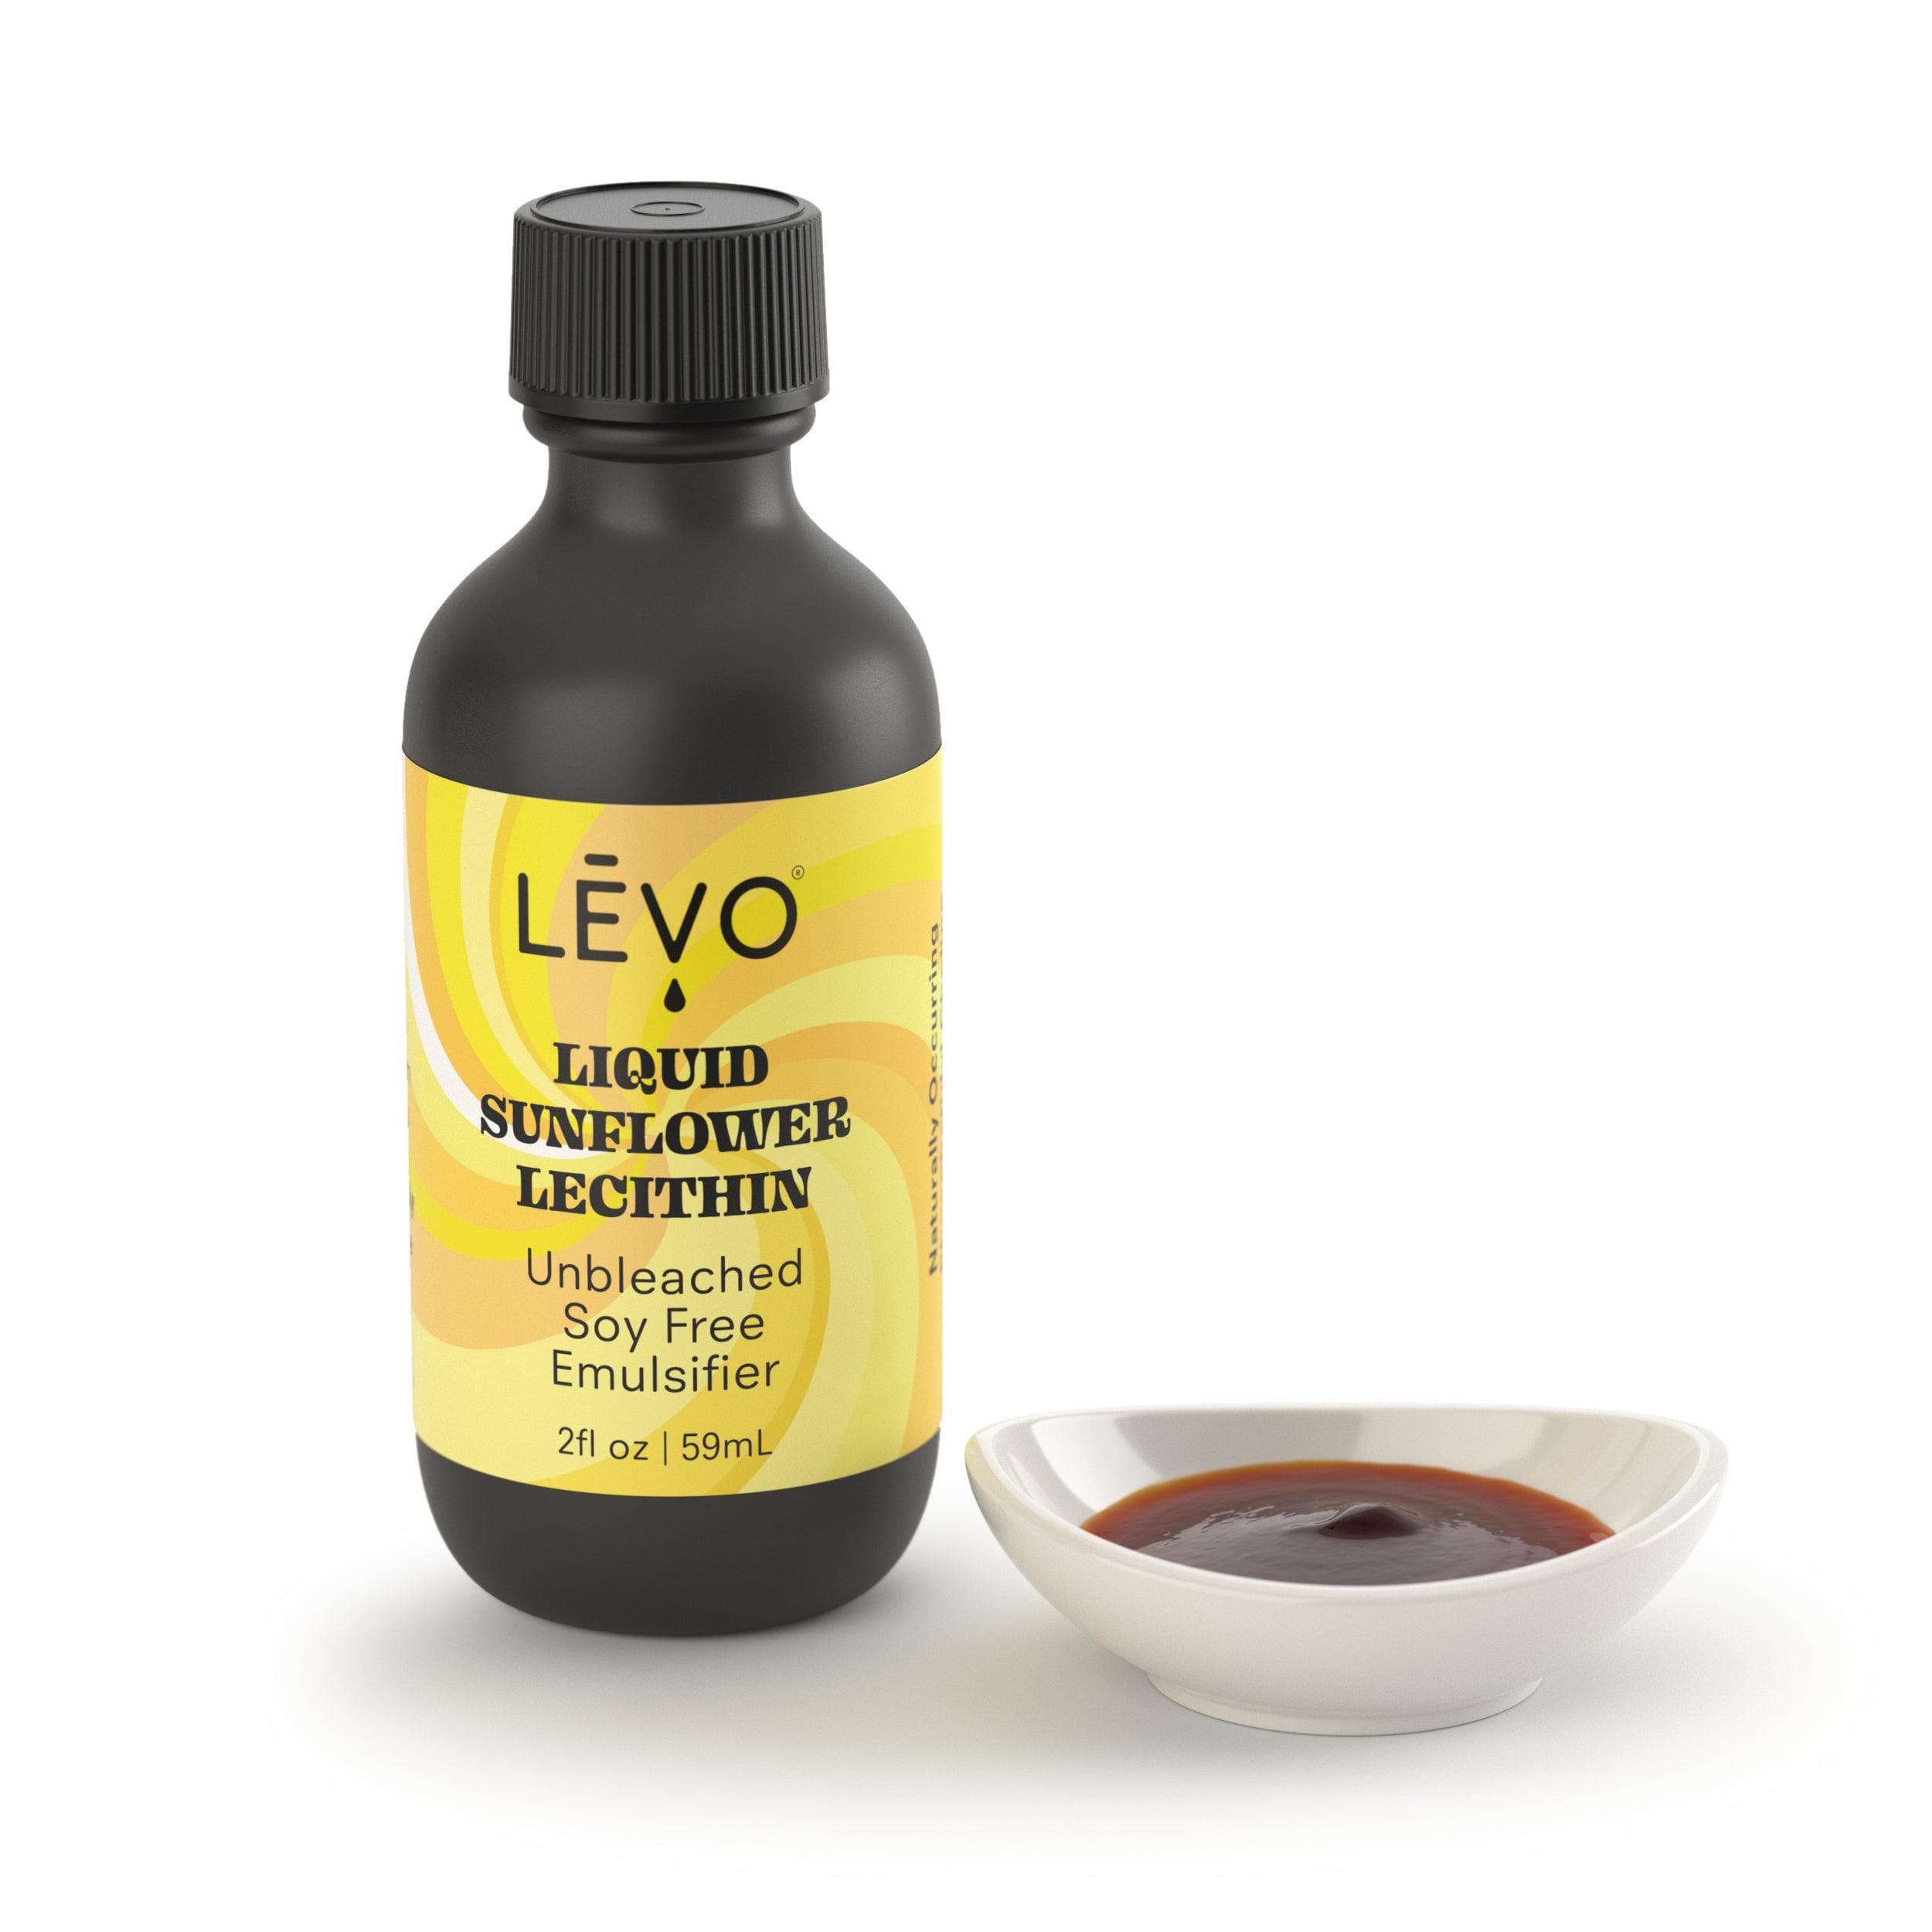 LEVO liquid sunflower lecithin next to container